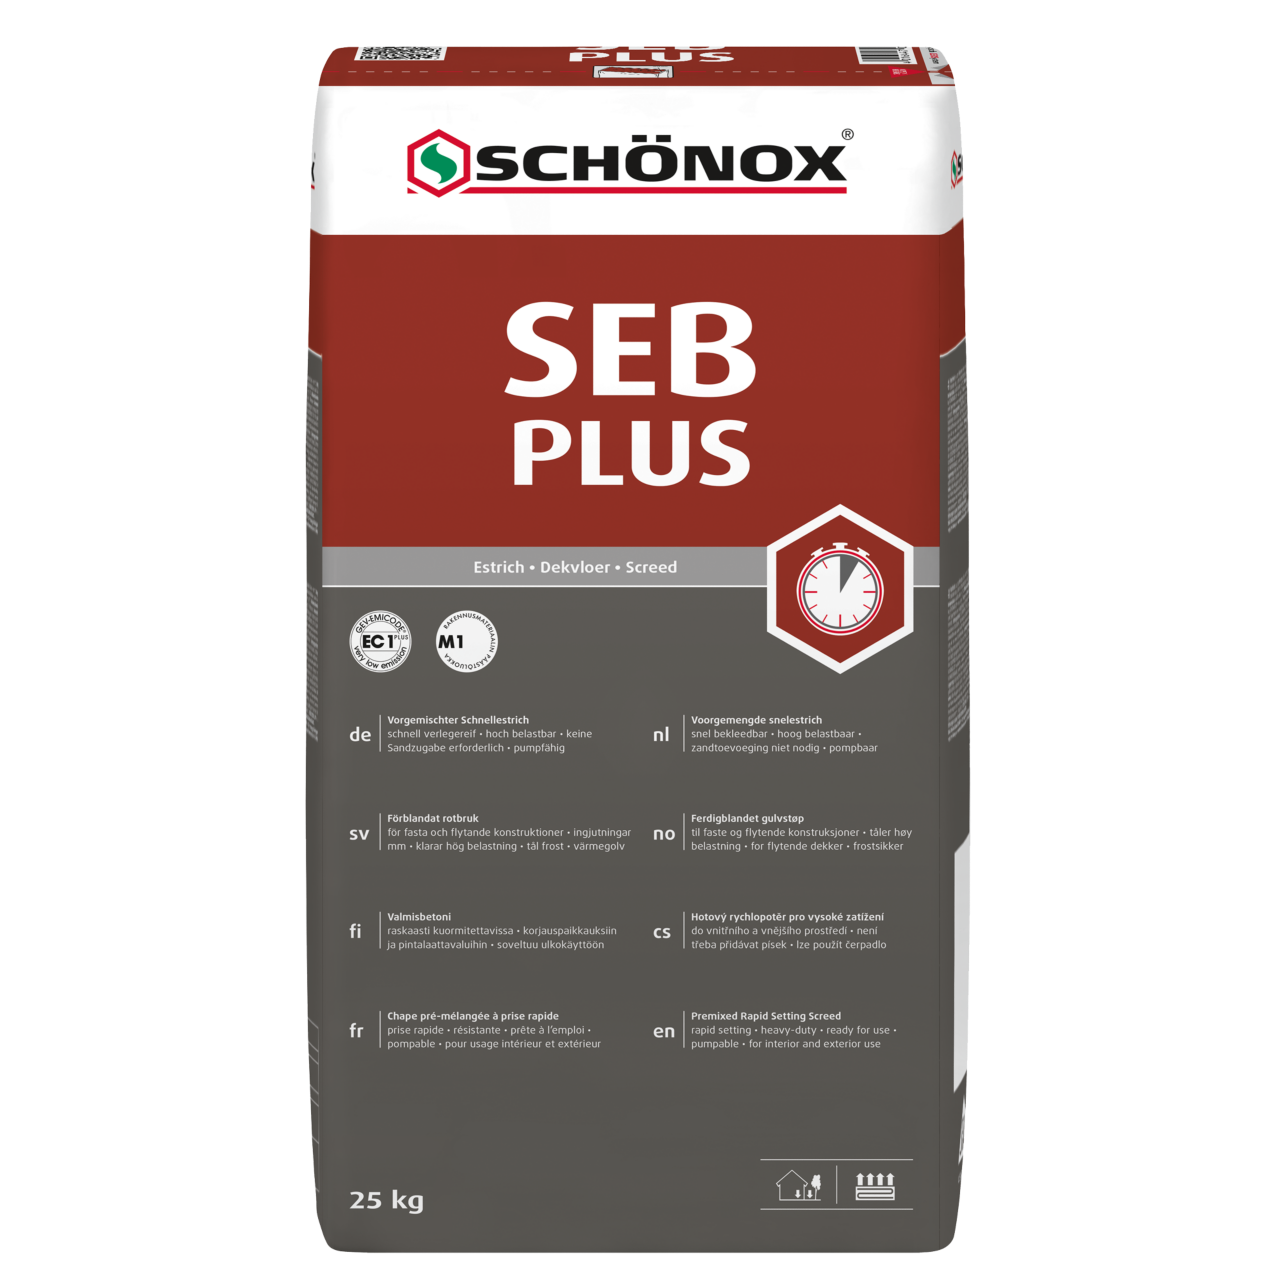 Schönox SEB Plus